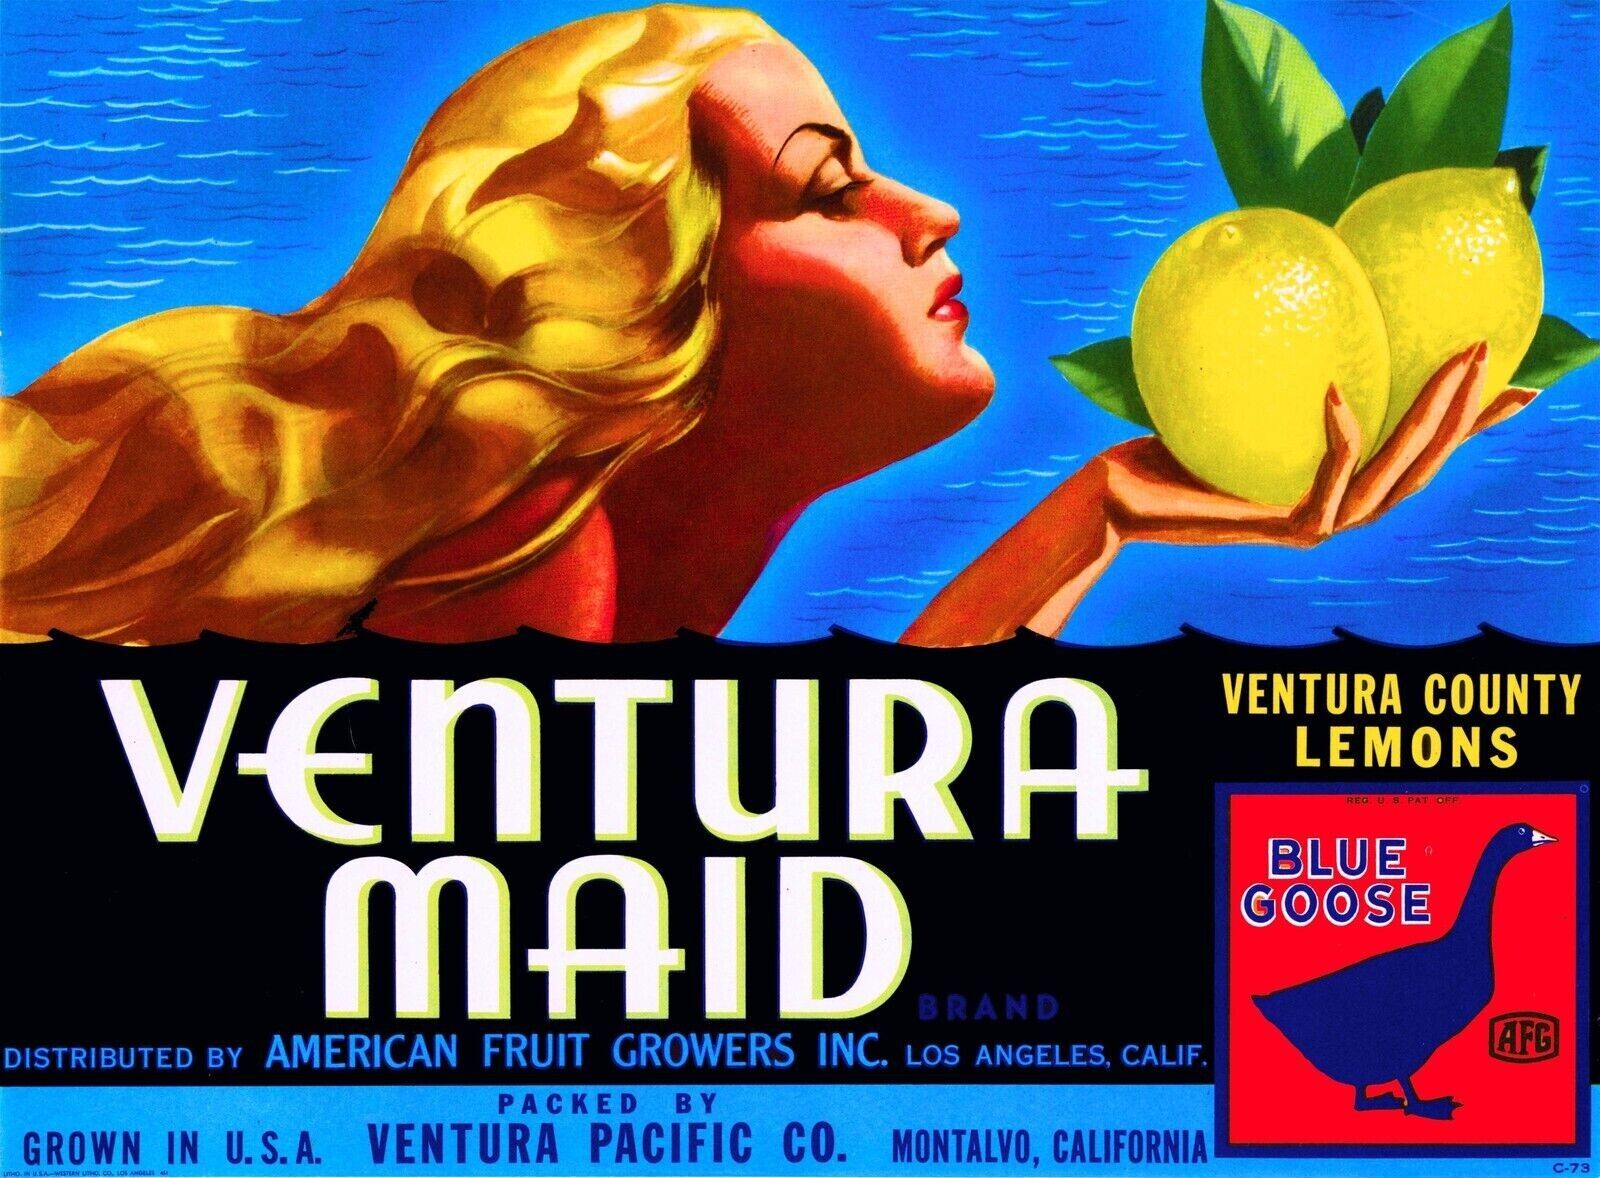 Ventura Maid Brand Lemon Montalvo Santa Barbara Citrus Fruit Crate Label 8.5x11